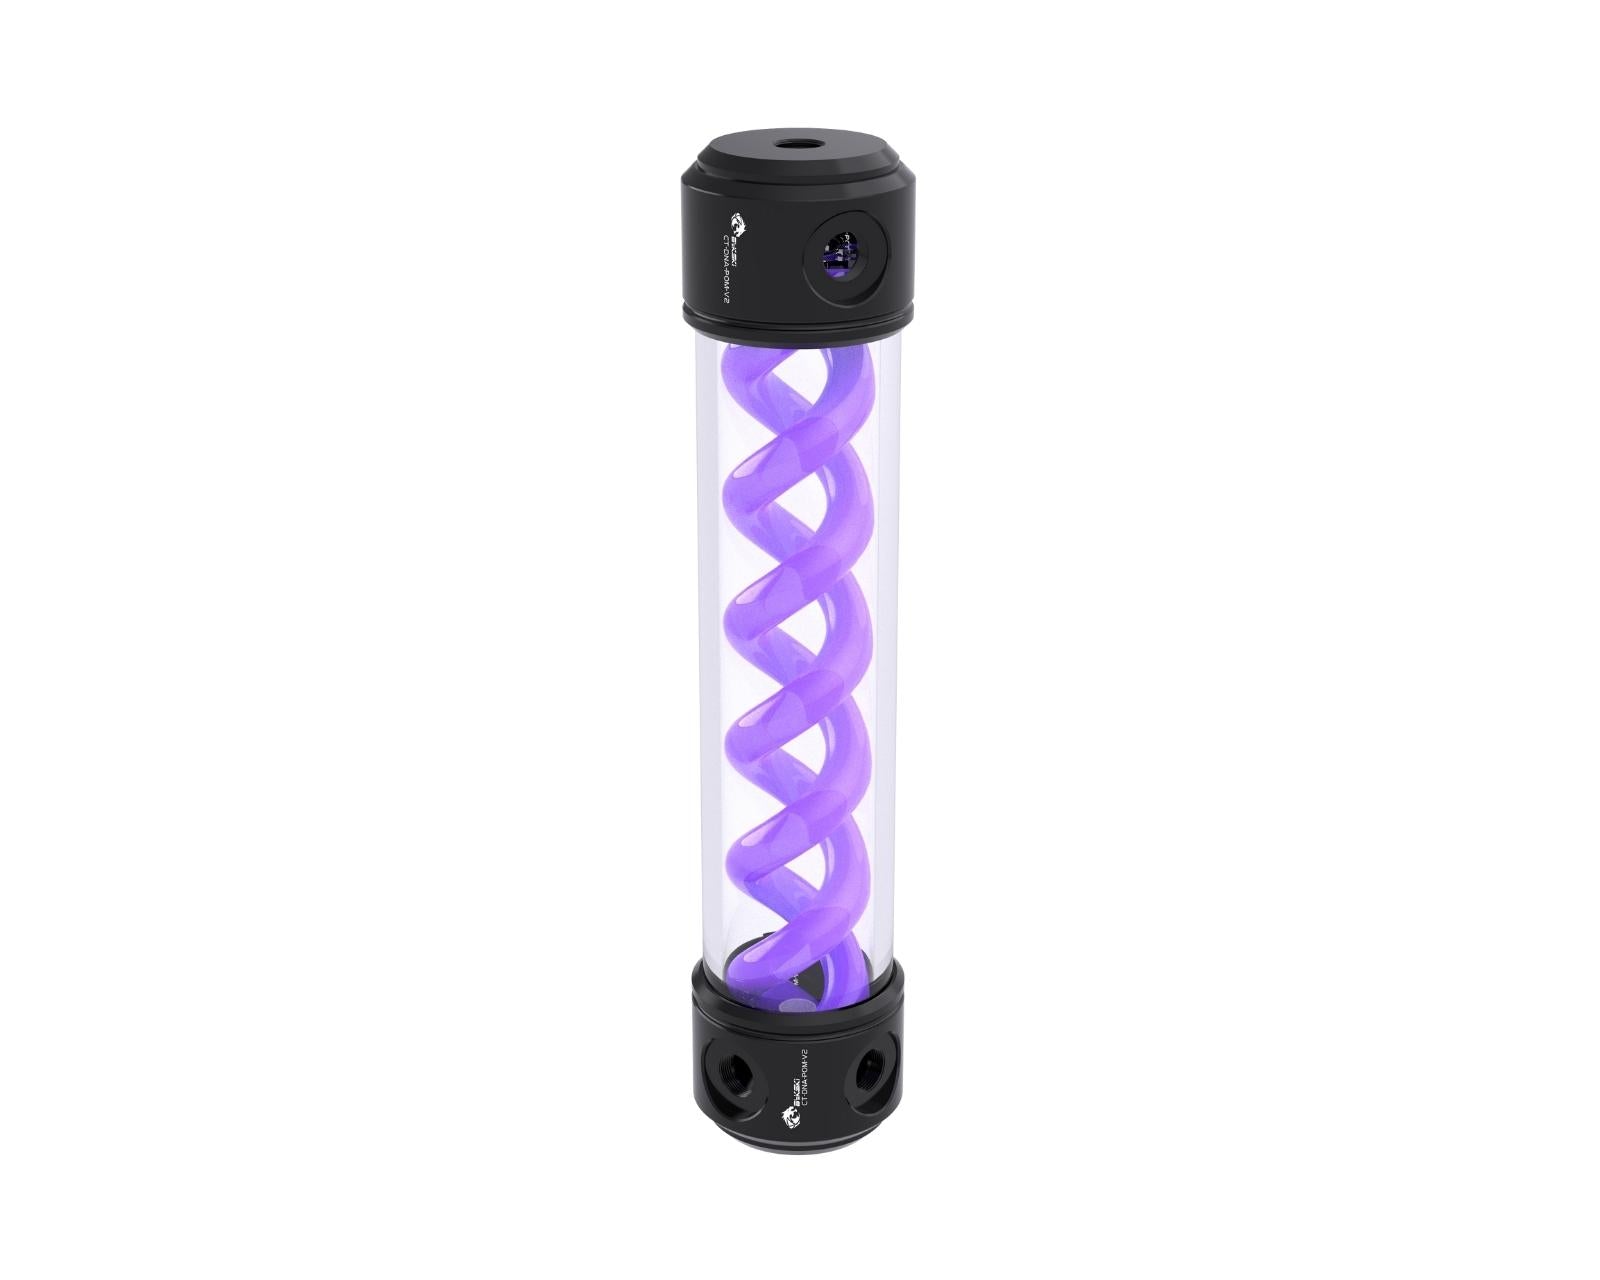 Bykski 50mm Cylindrical DNA Reservoir - Black POM - 260mm w/LED strip (CT-DNA-POM-V2-260) - Purple